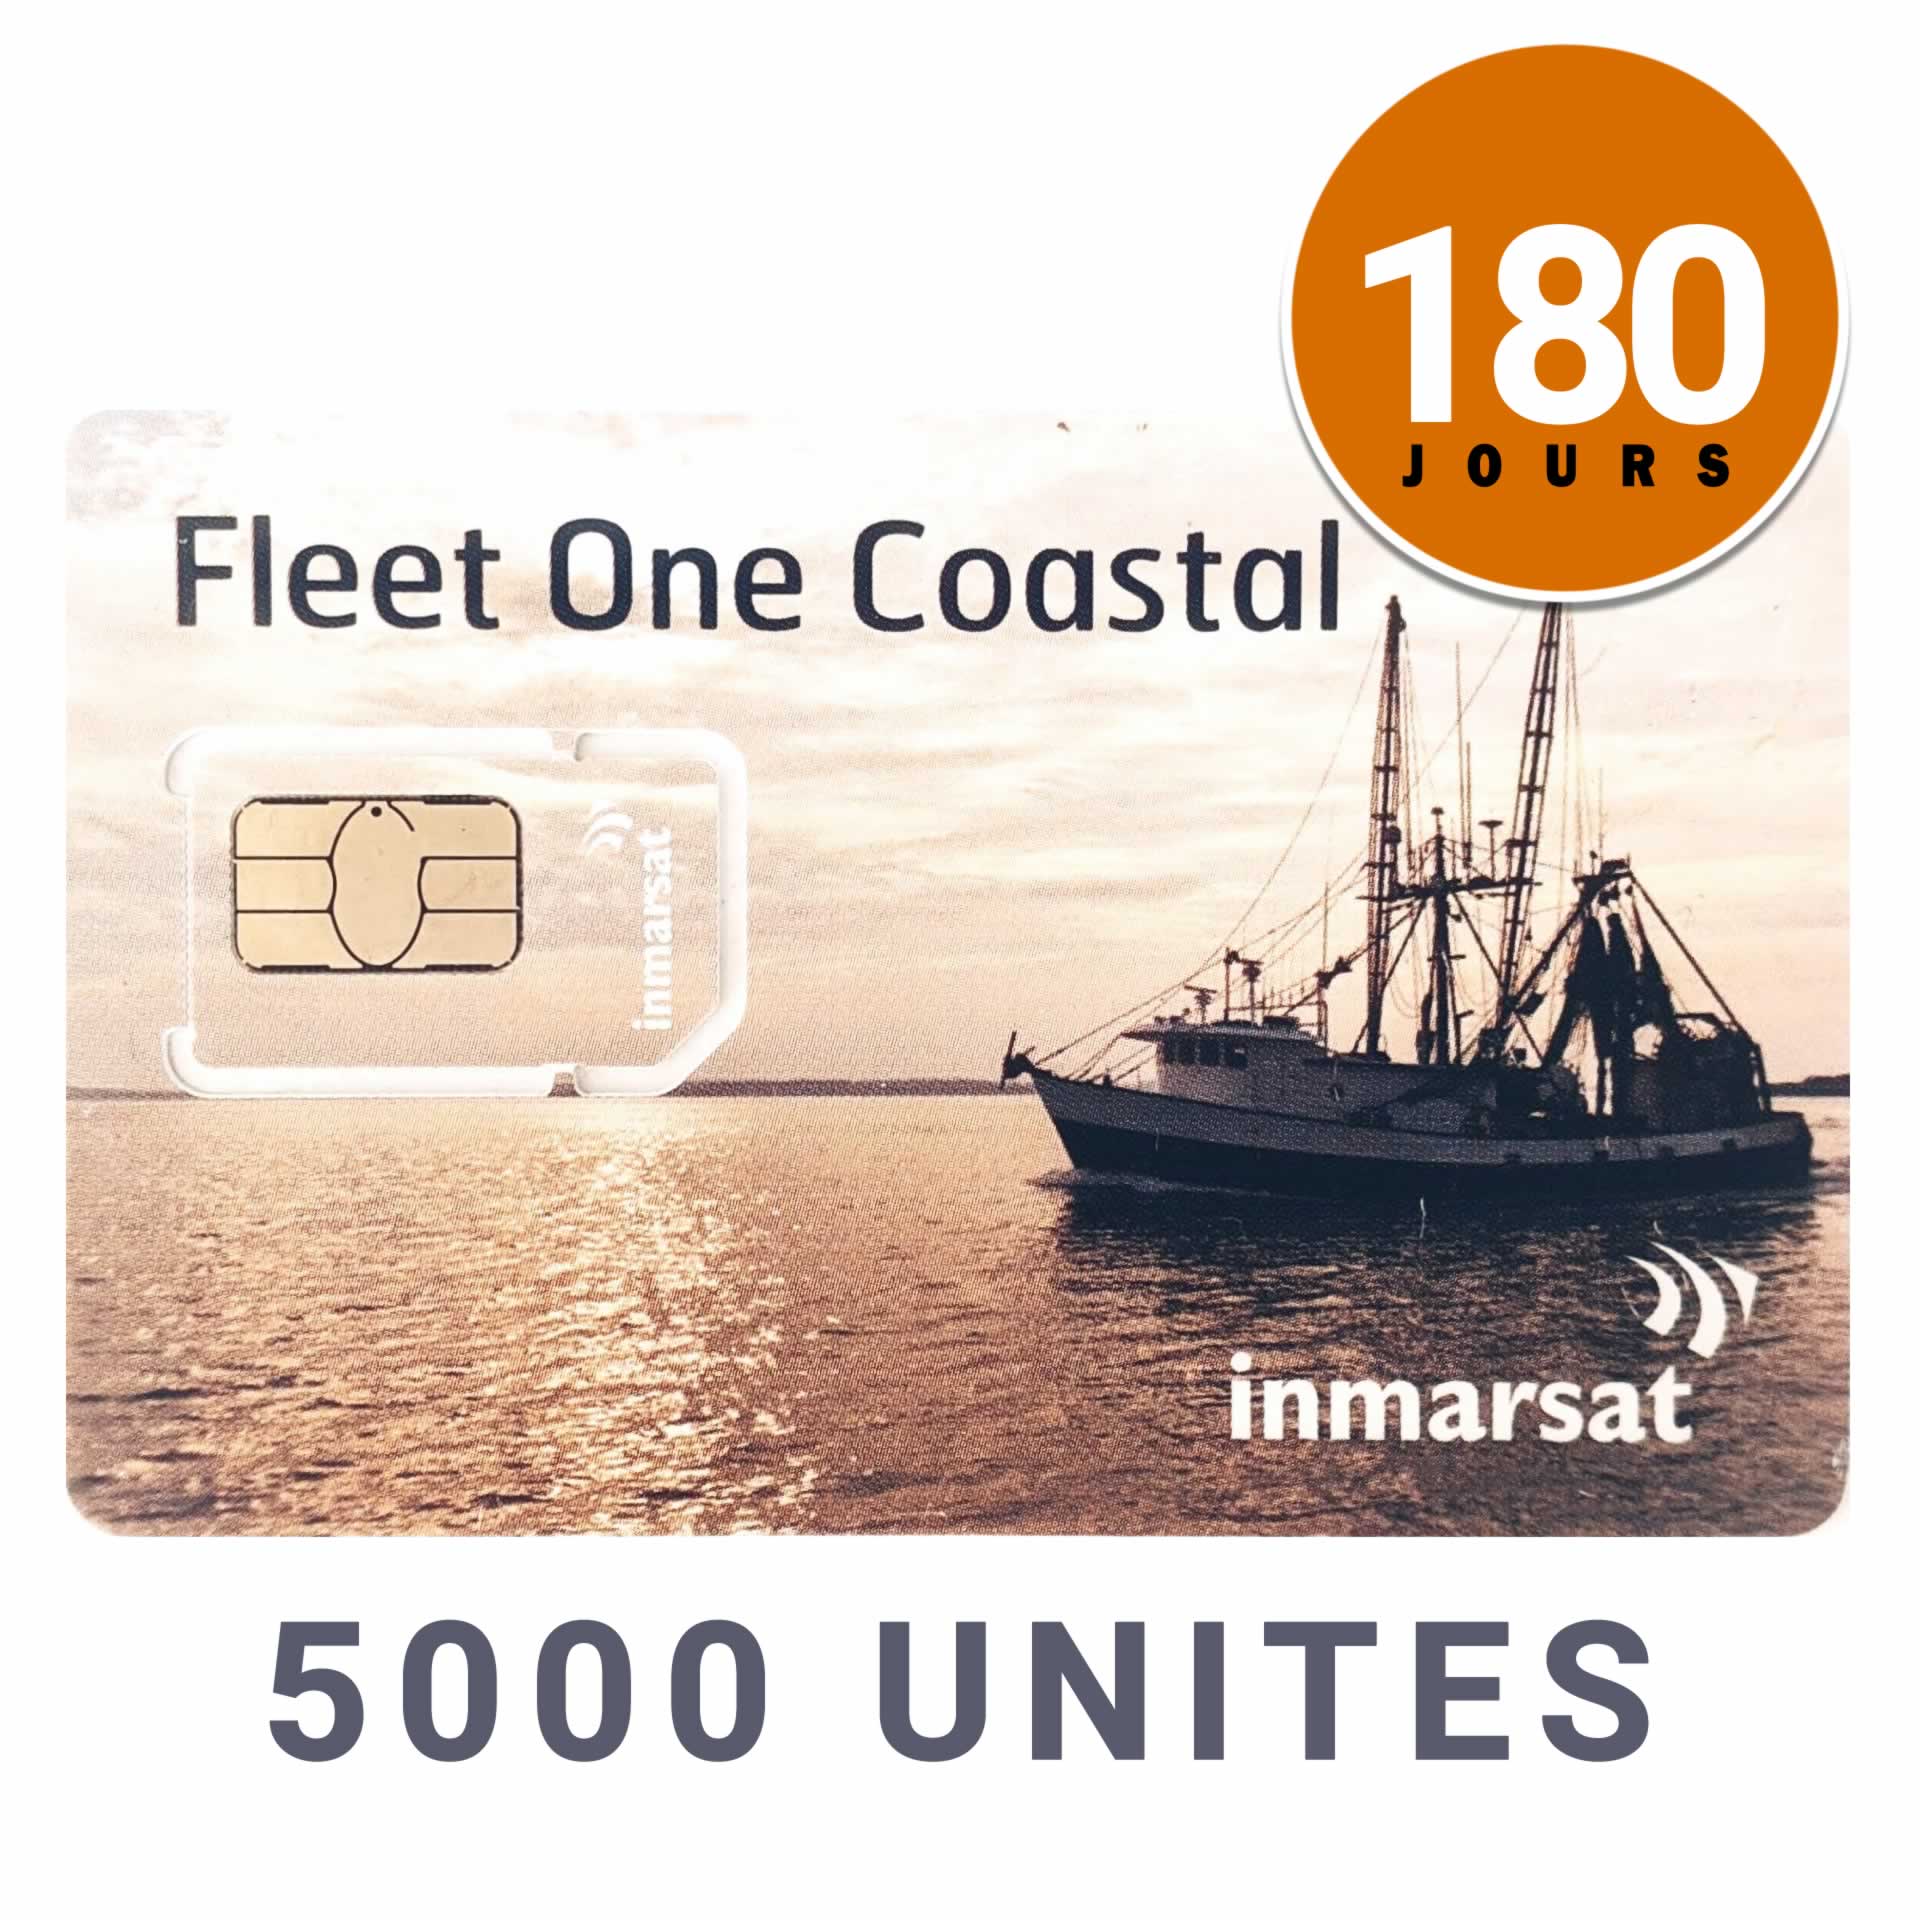 Carta prepagata INMARSAT Coast FLEET ONE ricaricabile - 5000 UNITA' - 180 GIORNI